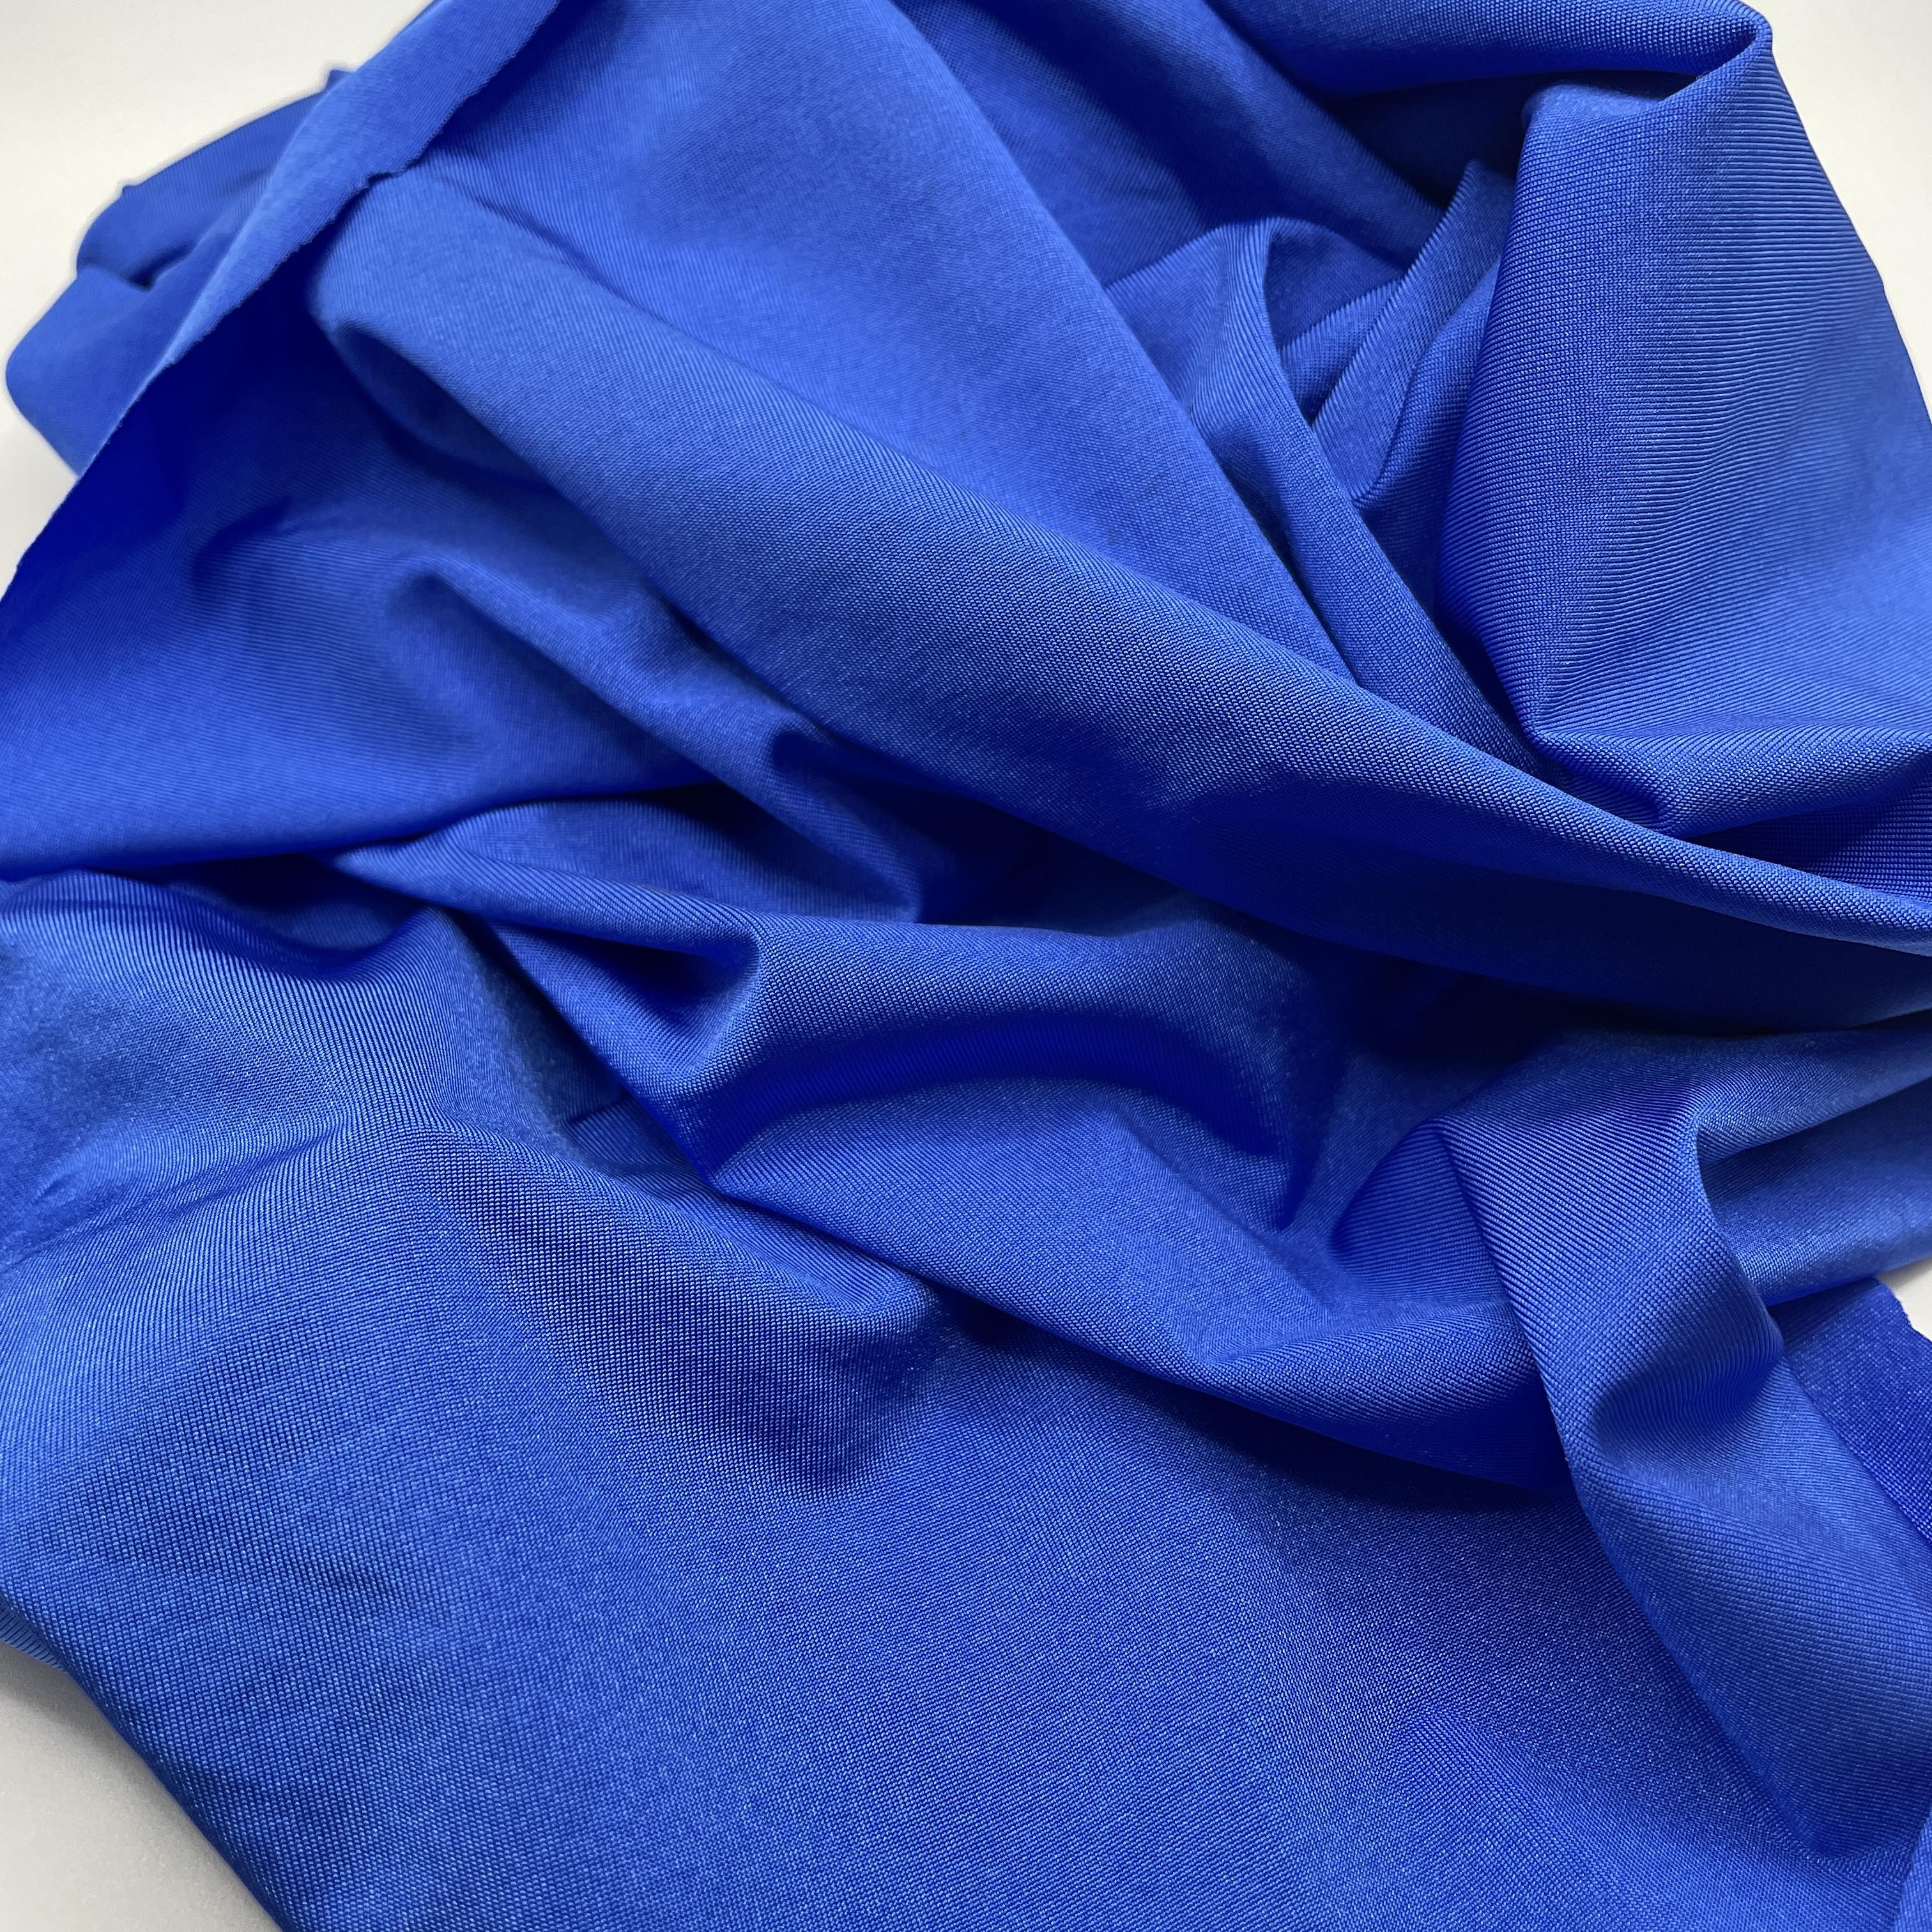 Swimwear/Lingerie Fabric - Polyamide Elastane (Folie) 145gsm - Stretch -  Plain - Royal BLUE